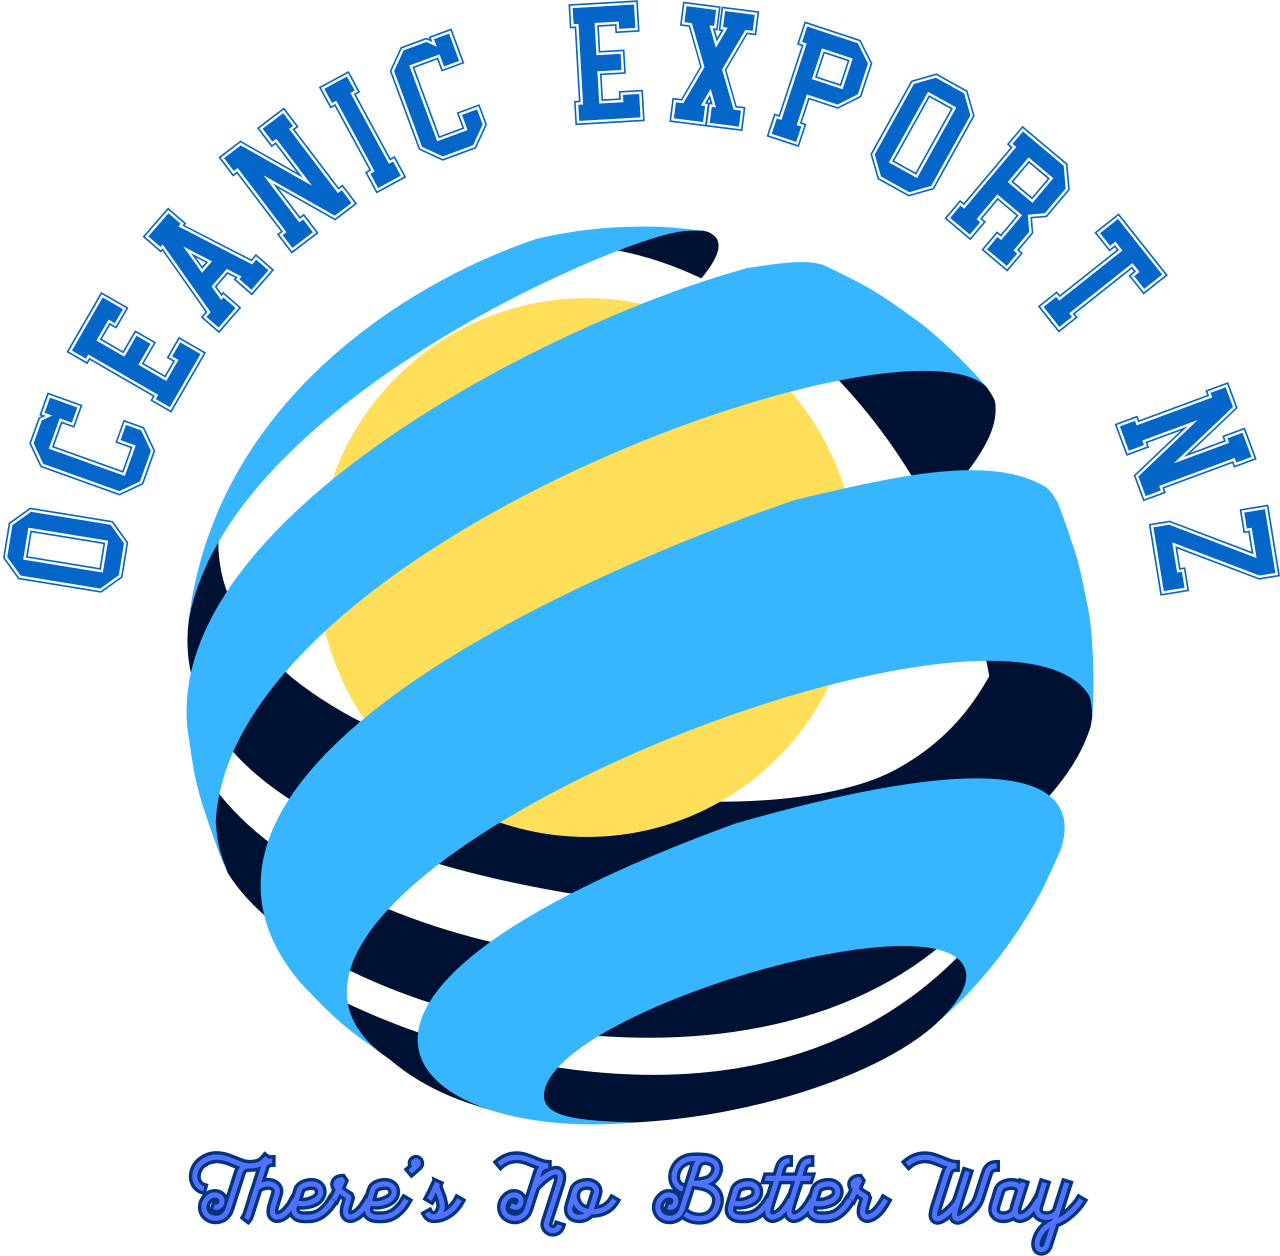 Oceanic Export Nz's web page